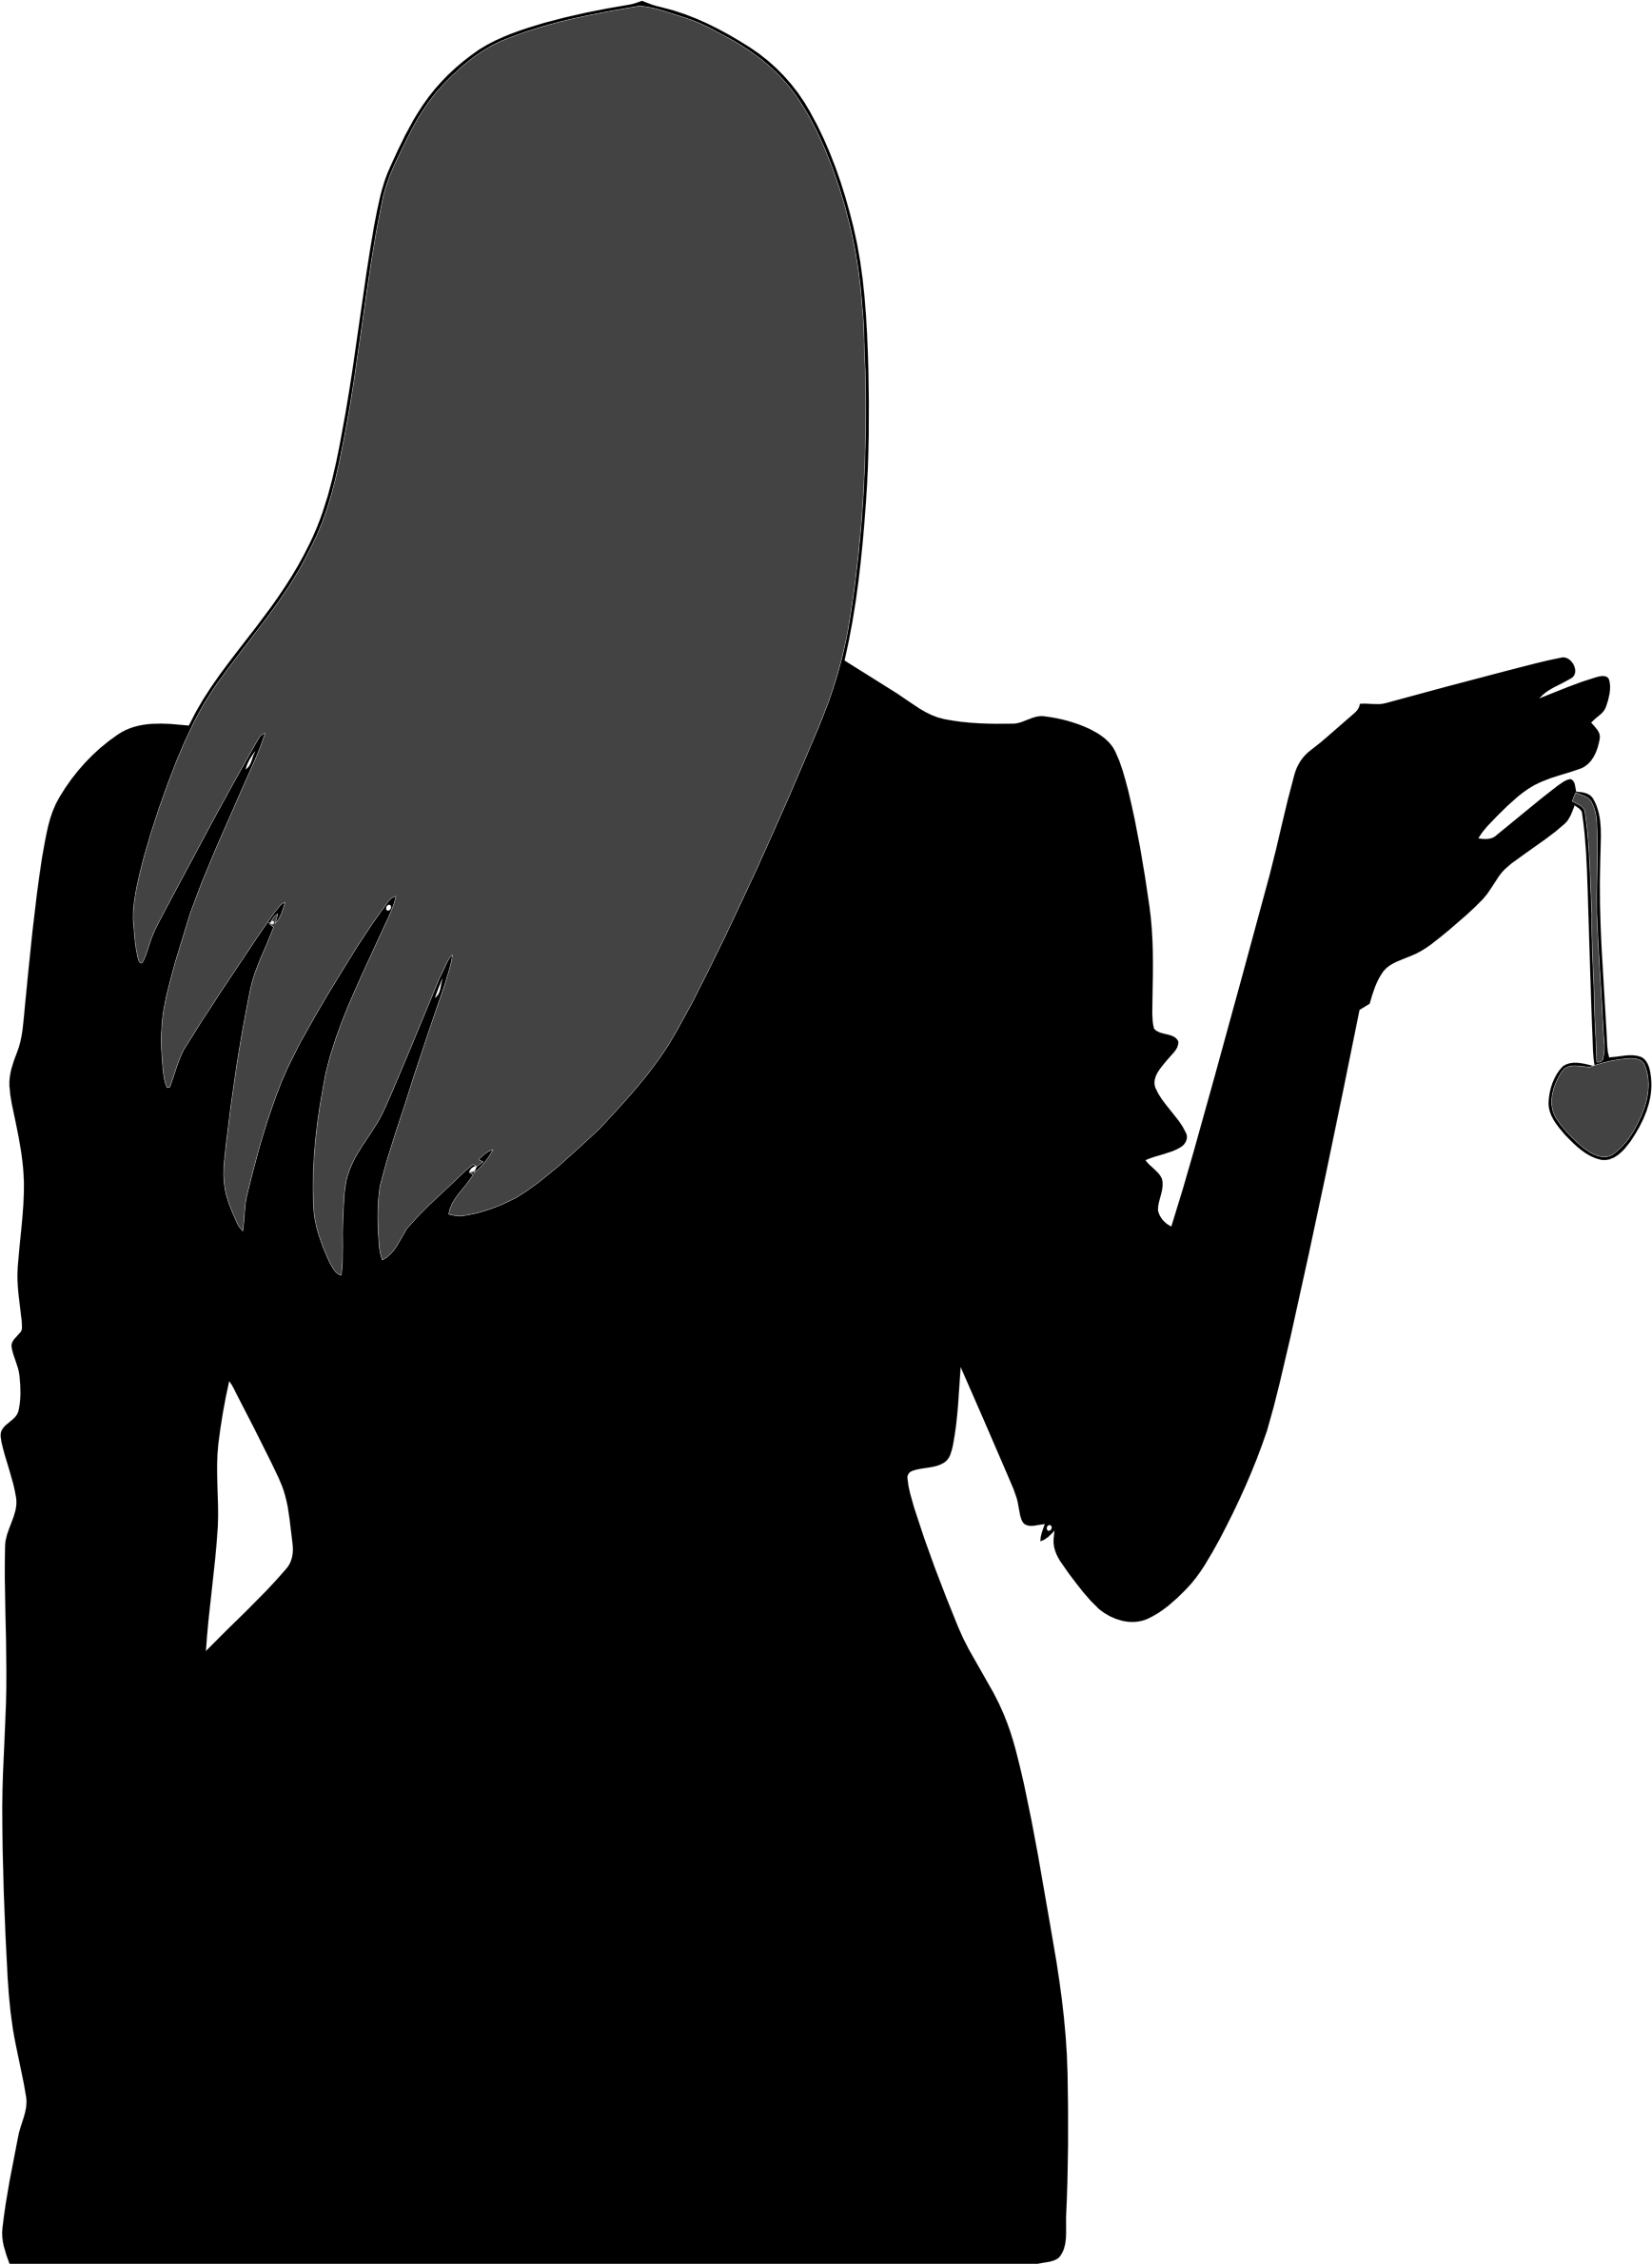 Big Image - Woman's Silhouette (1736x2379)